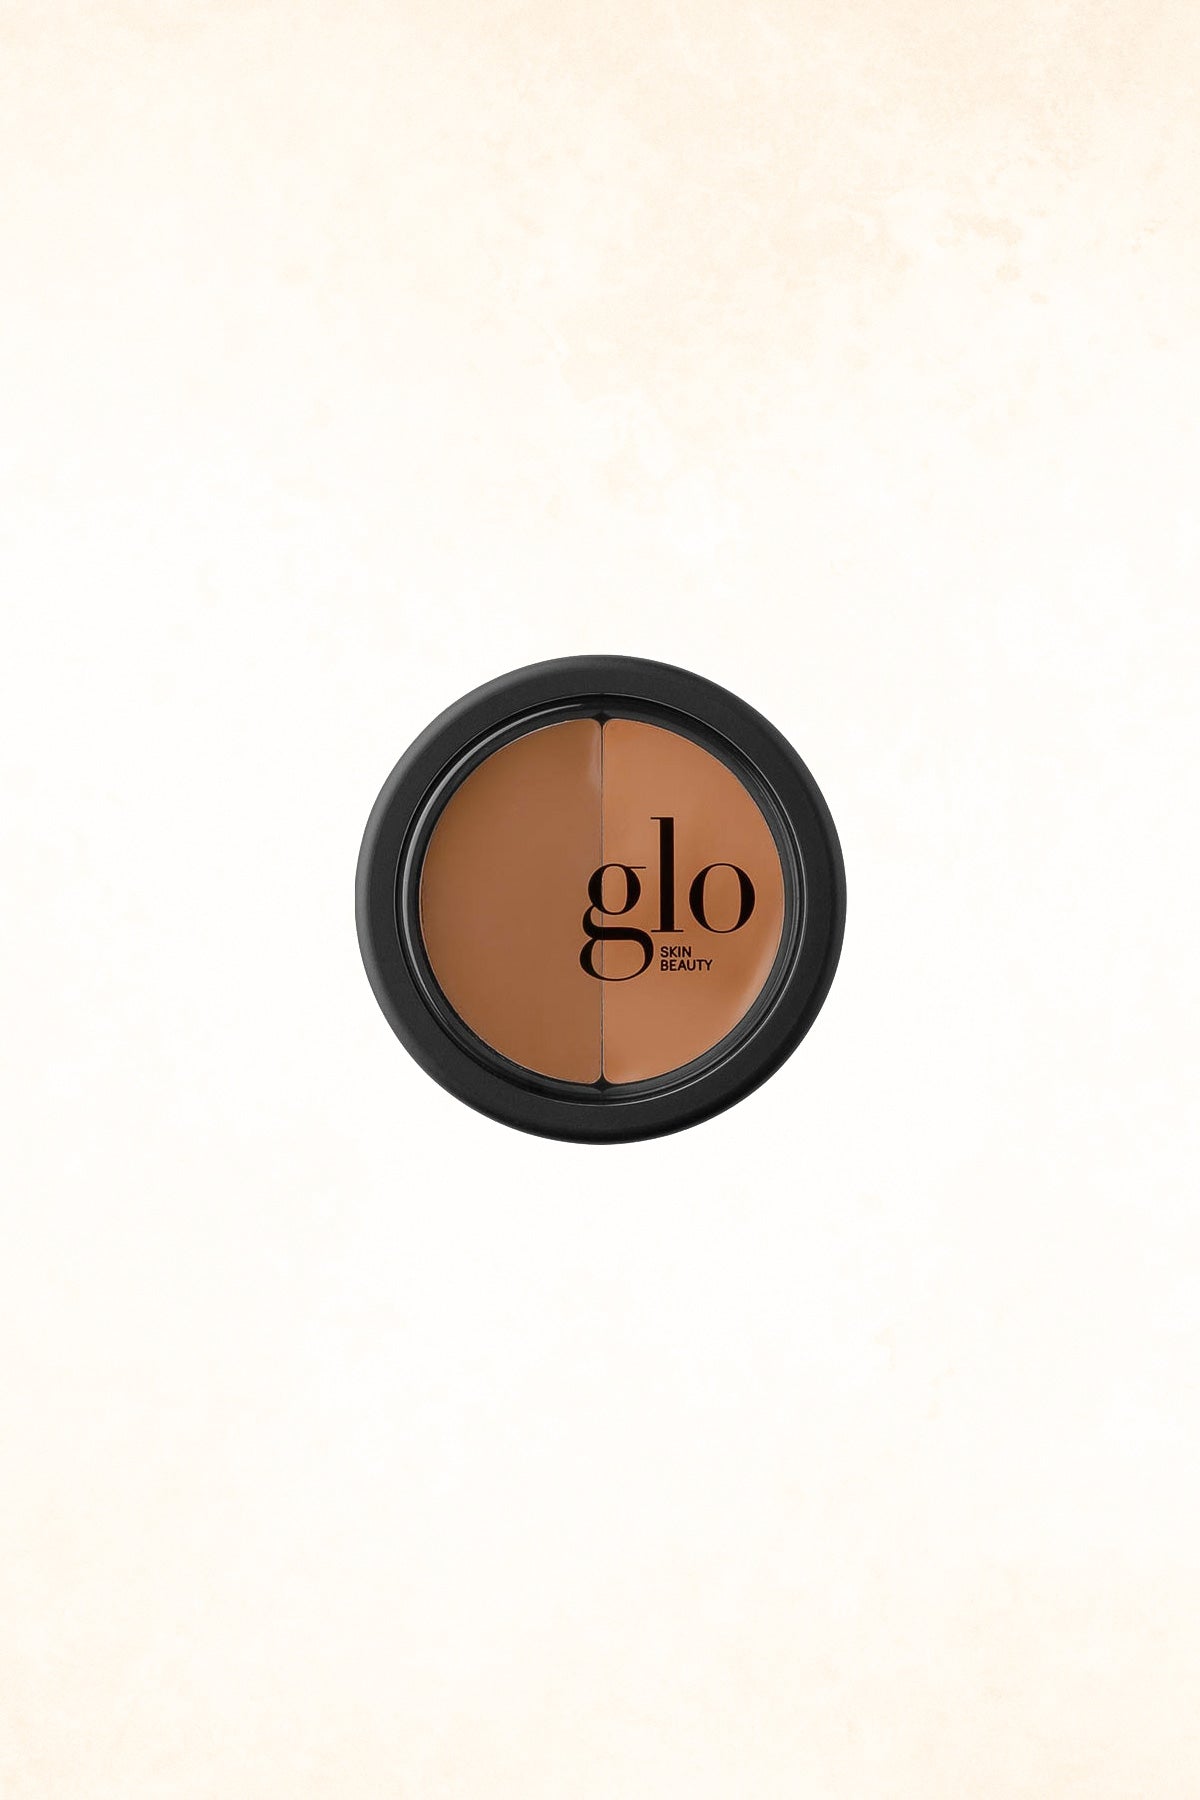 Glo Skin Beauty - Under Eye Concealer - Honey